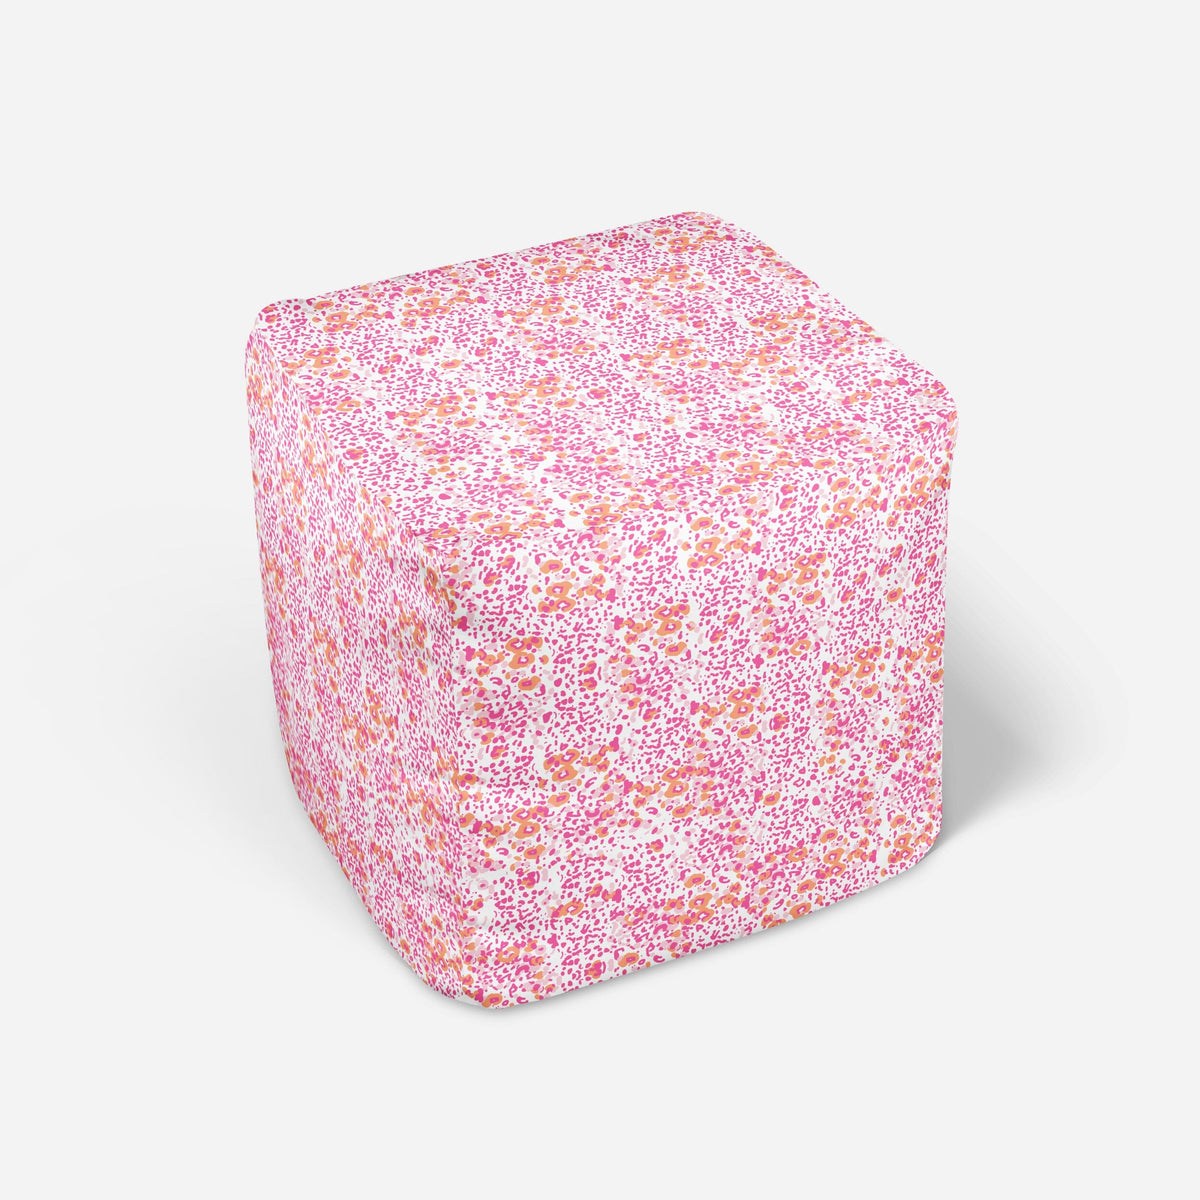 Bean Bag Cube - Poppy Field Pink Room Accessories, Cubes, Poufs MWW 